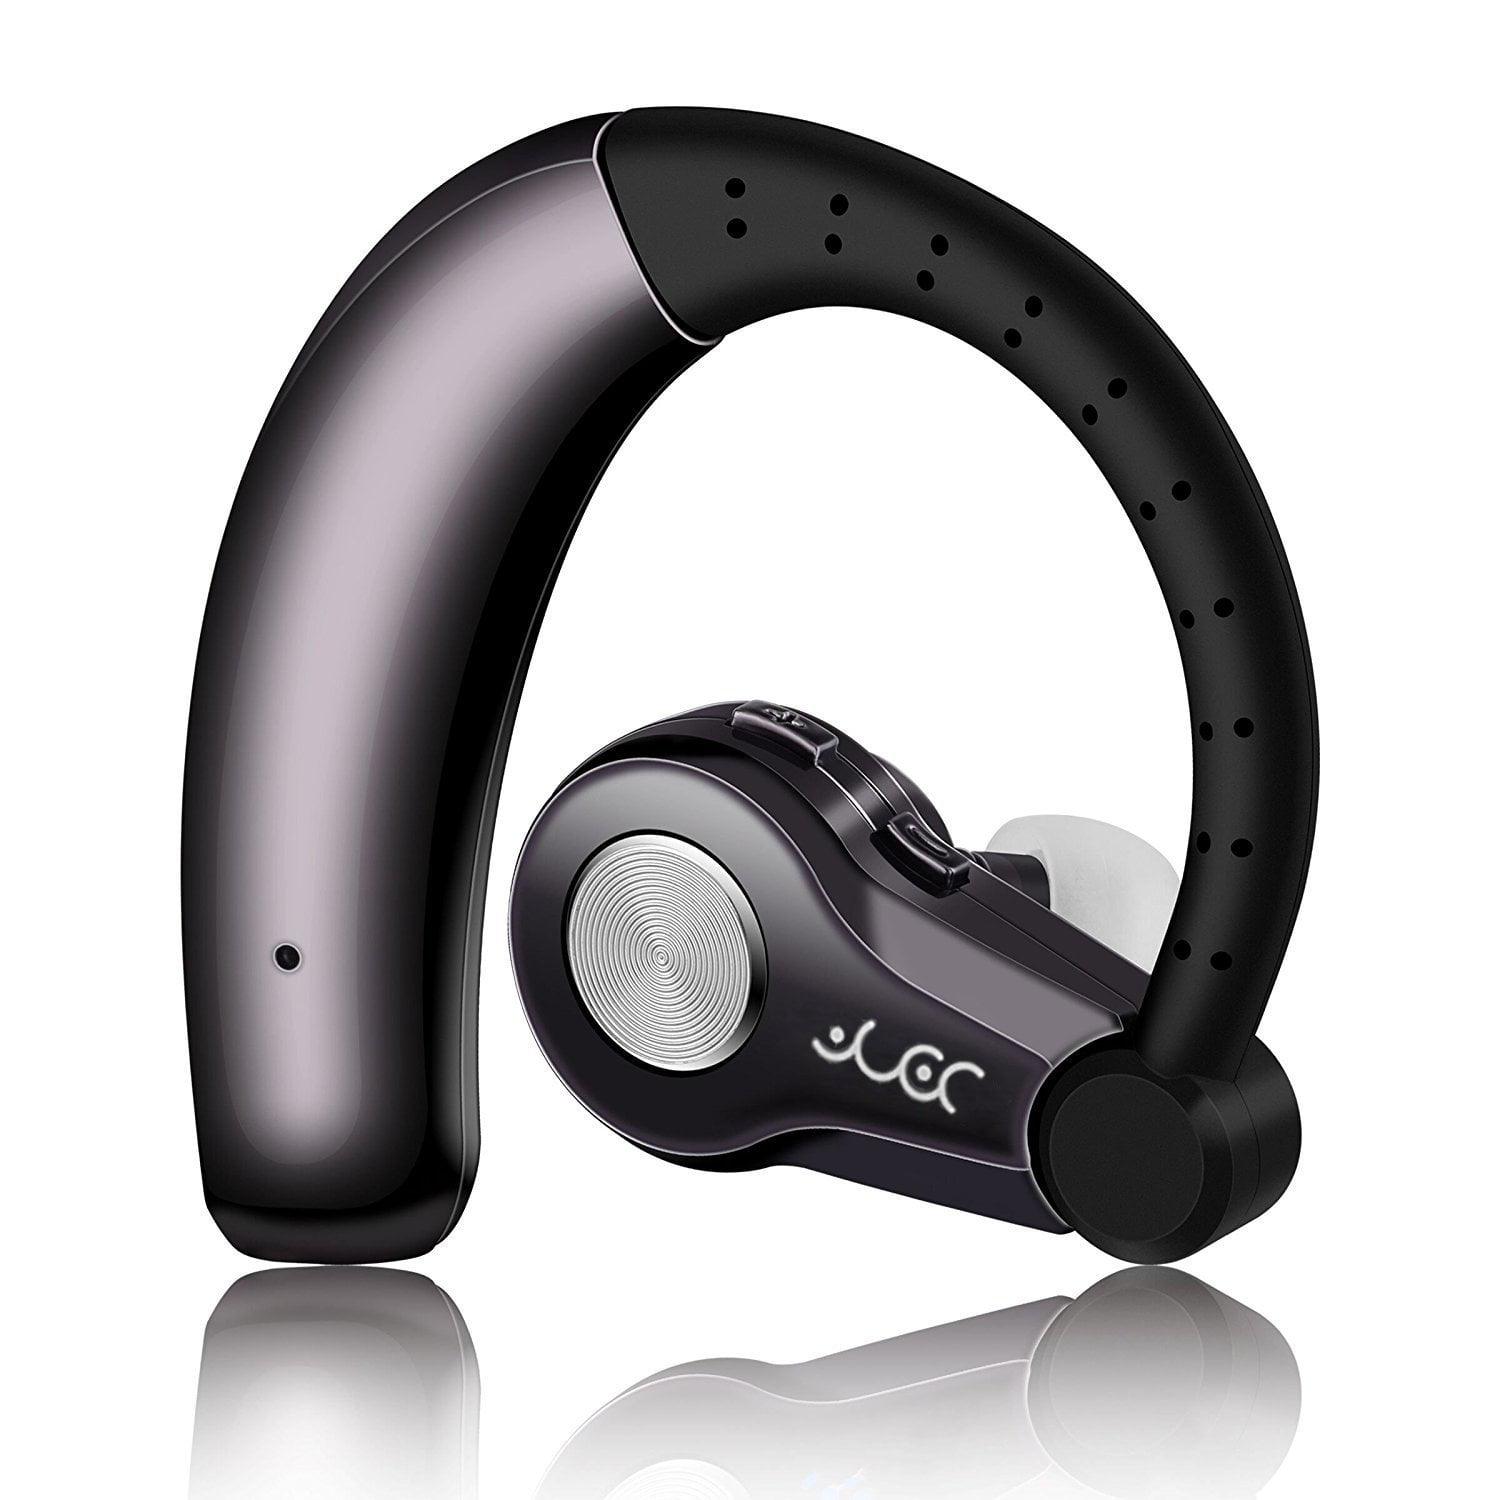 1 PCS Ear Bluetooth Headset Wireless Earphone Bluetooth Earpiece Running Stereo Earbuds with Microphone